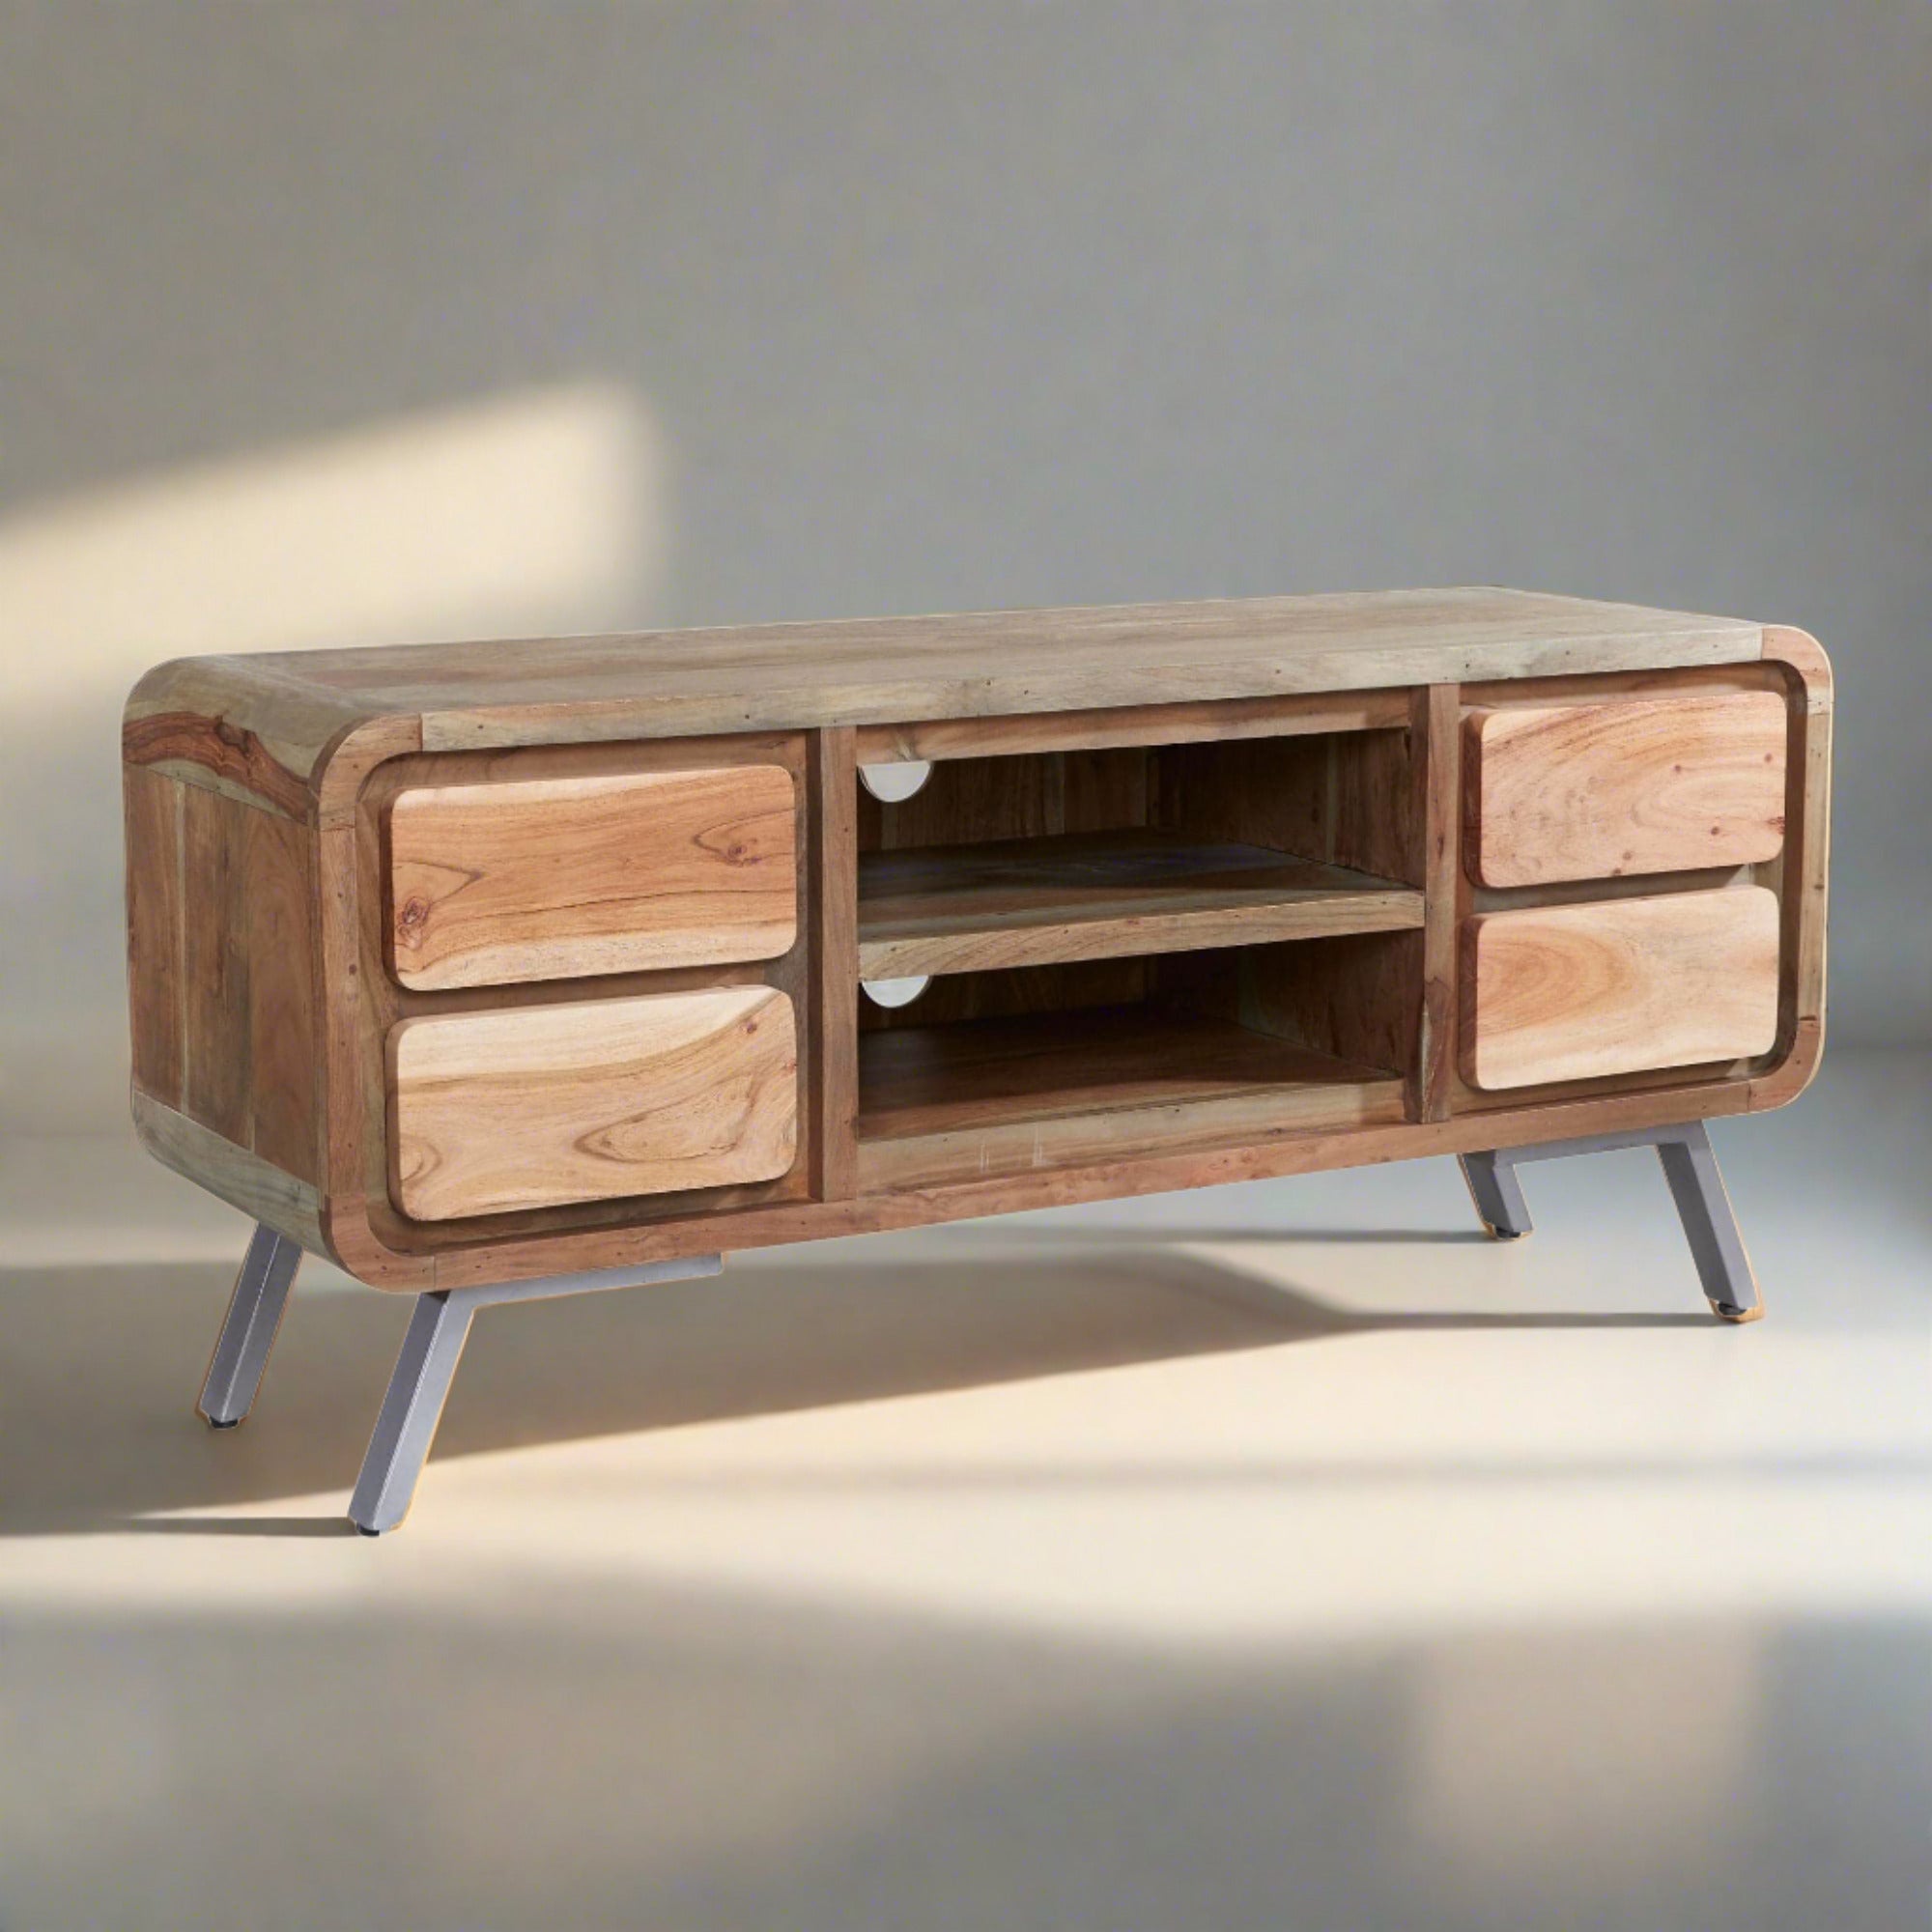 Kasia handmade solid acacia wood TV Stand with reclaimed metal legs | malletandplane.com